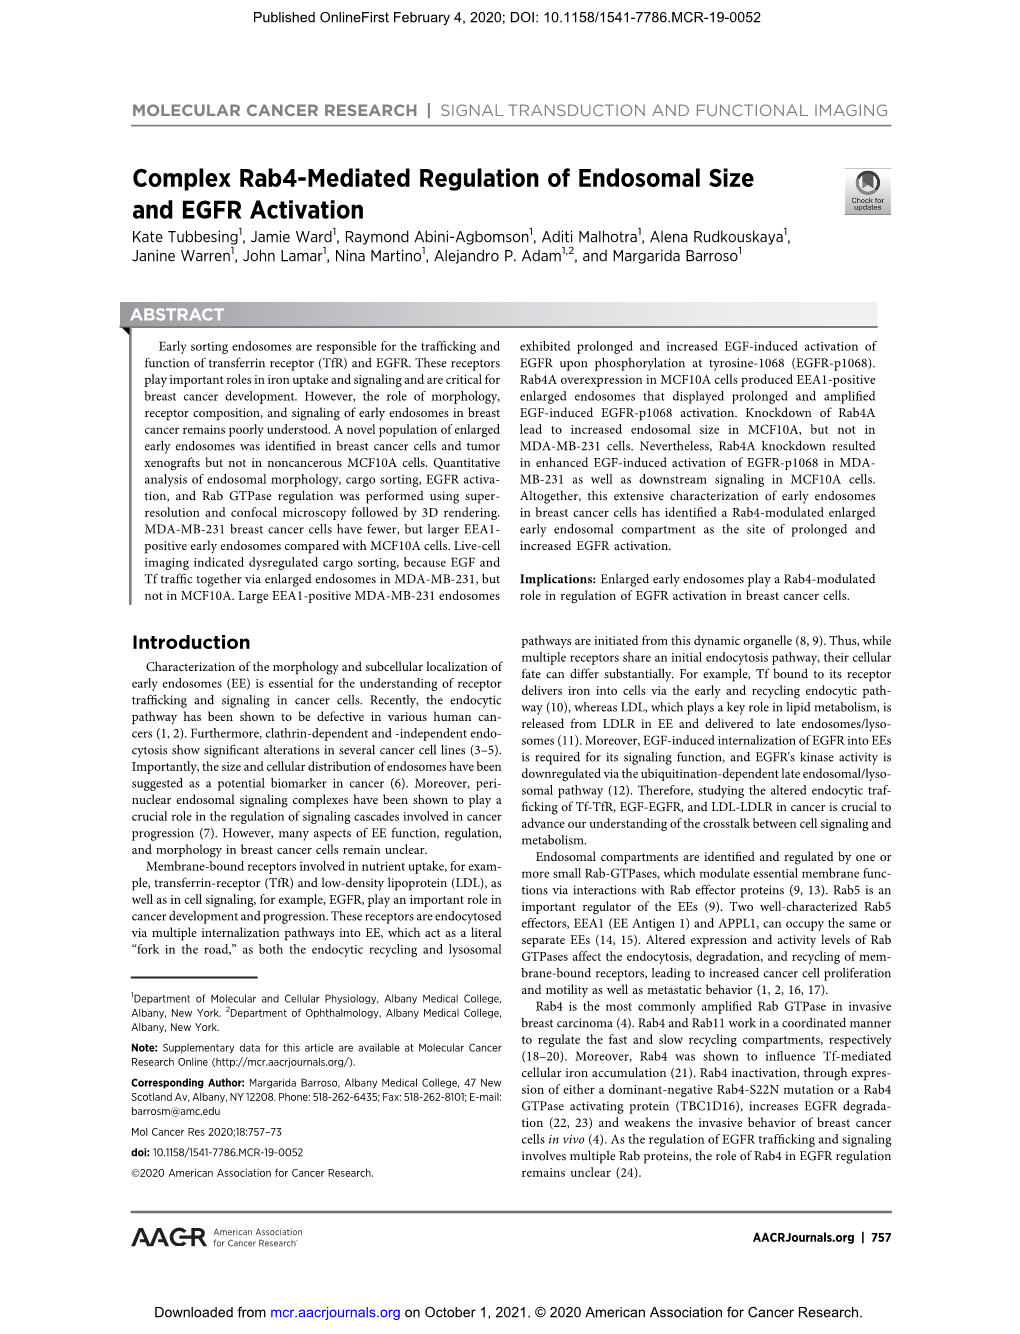 Complex Rab4-Mediated Regulation of Endosomal Size and EGFR Activation